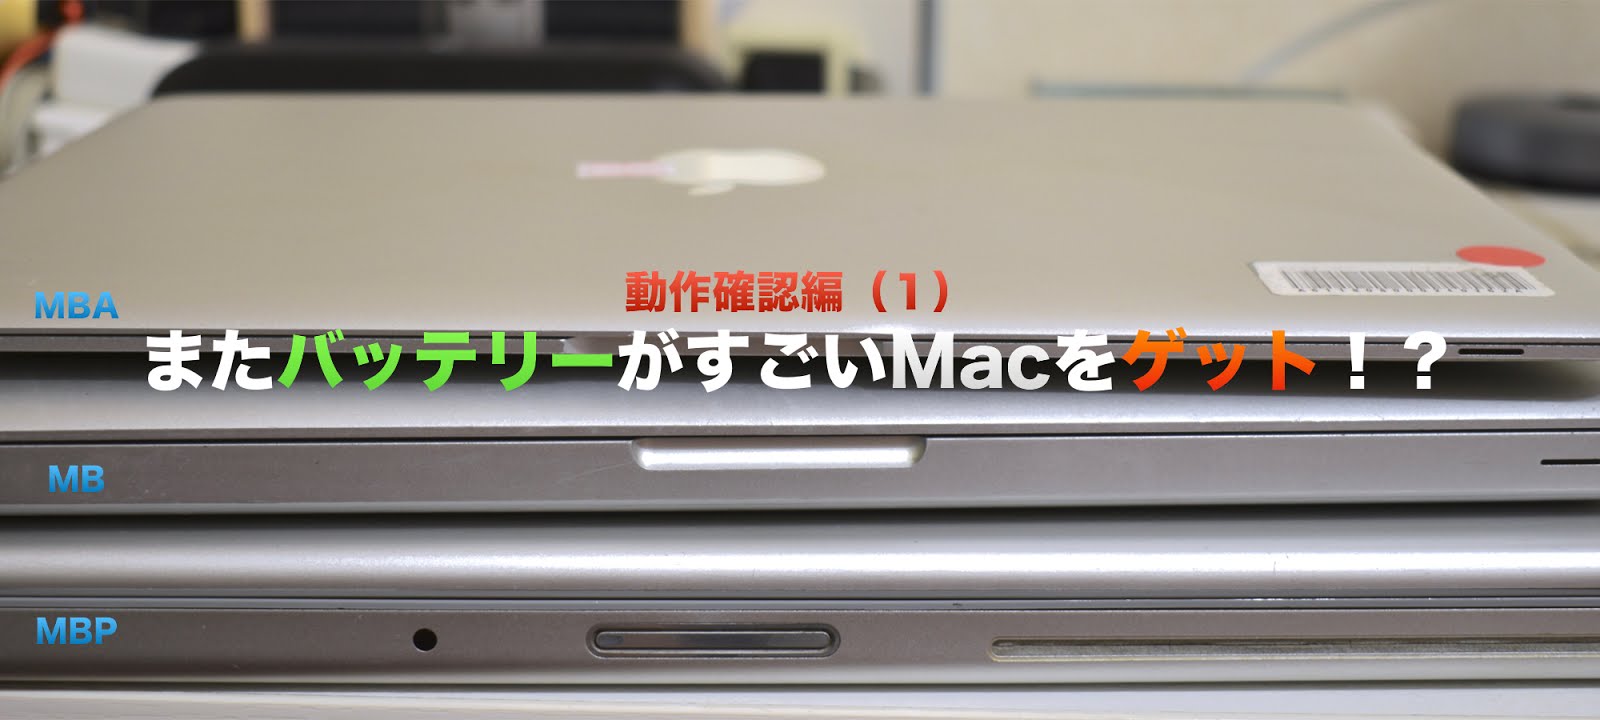 MacBook pro 13.1ジャンク依り